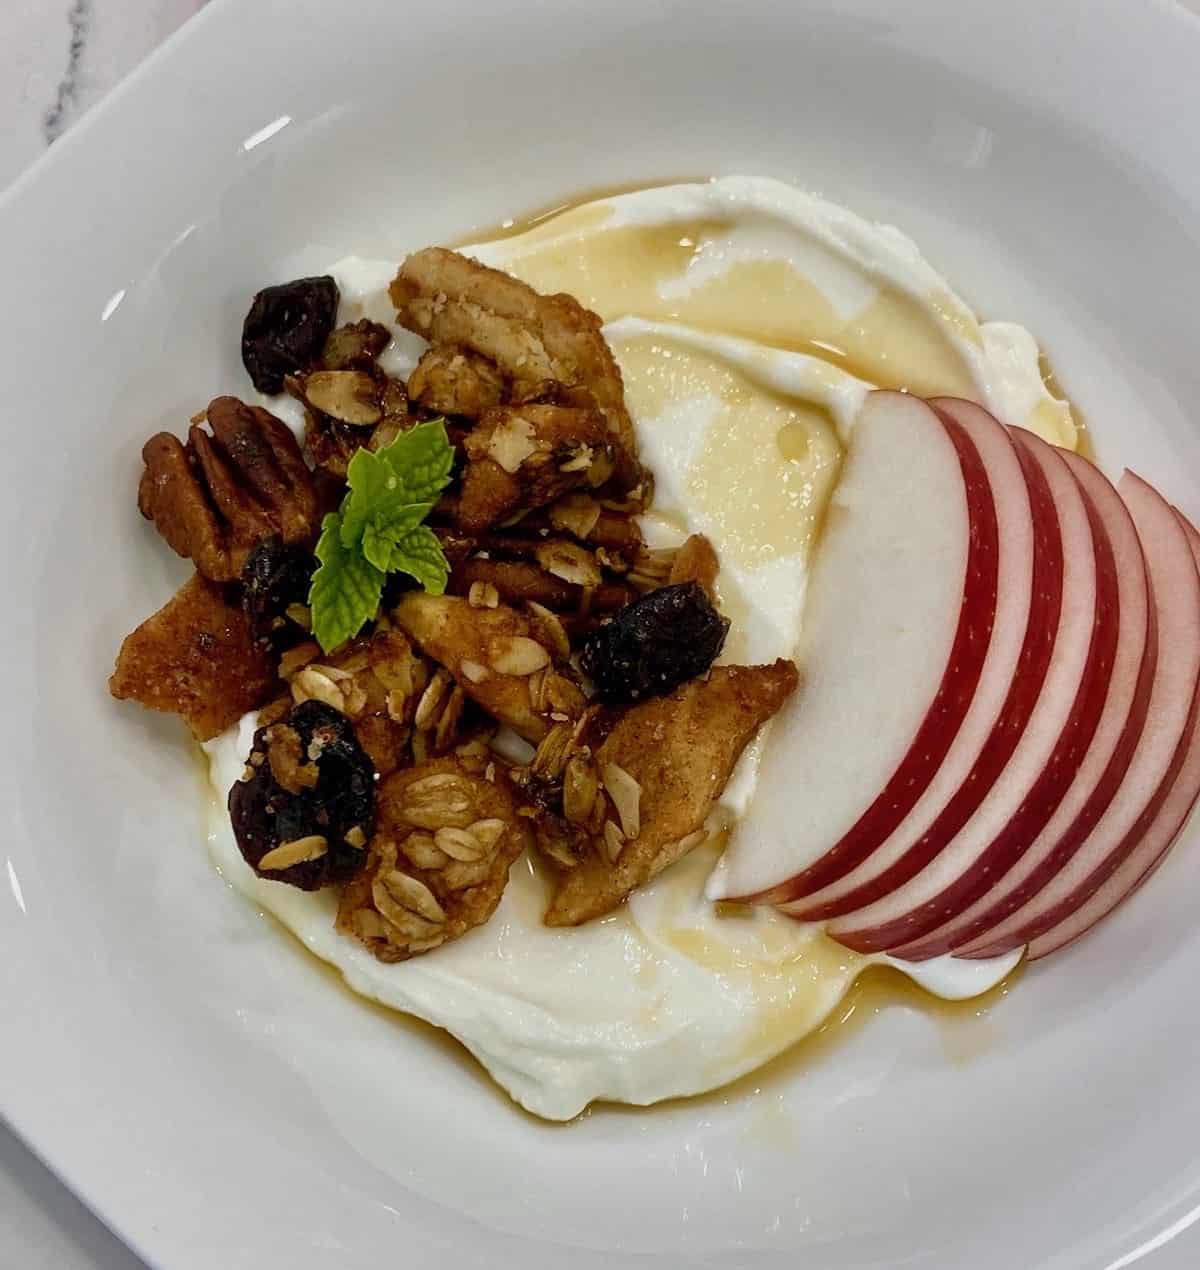 Pie crust granola with yogurt and apples.